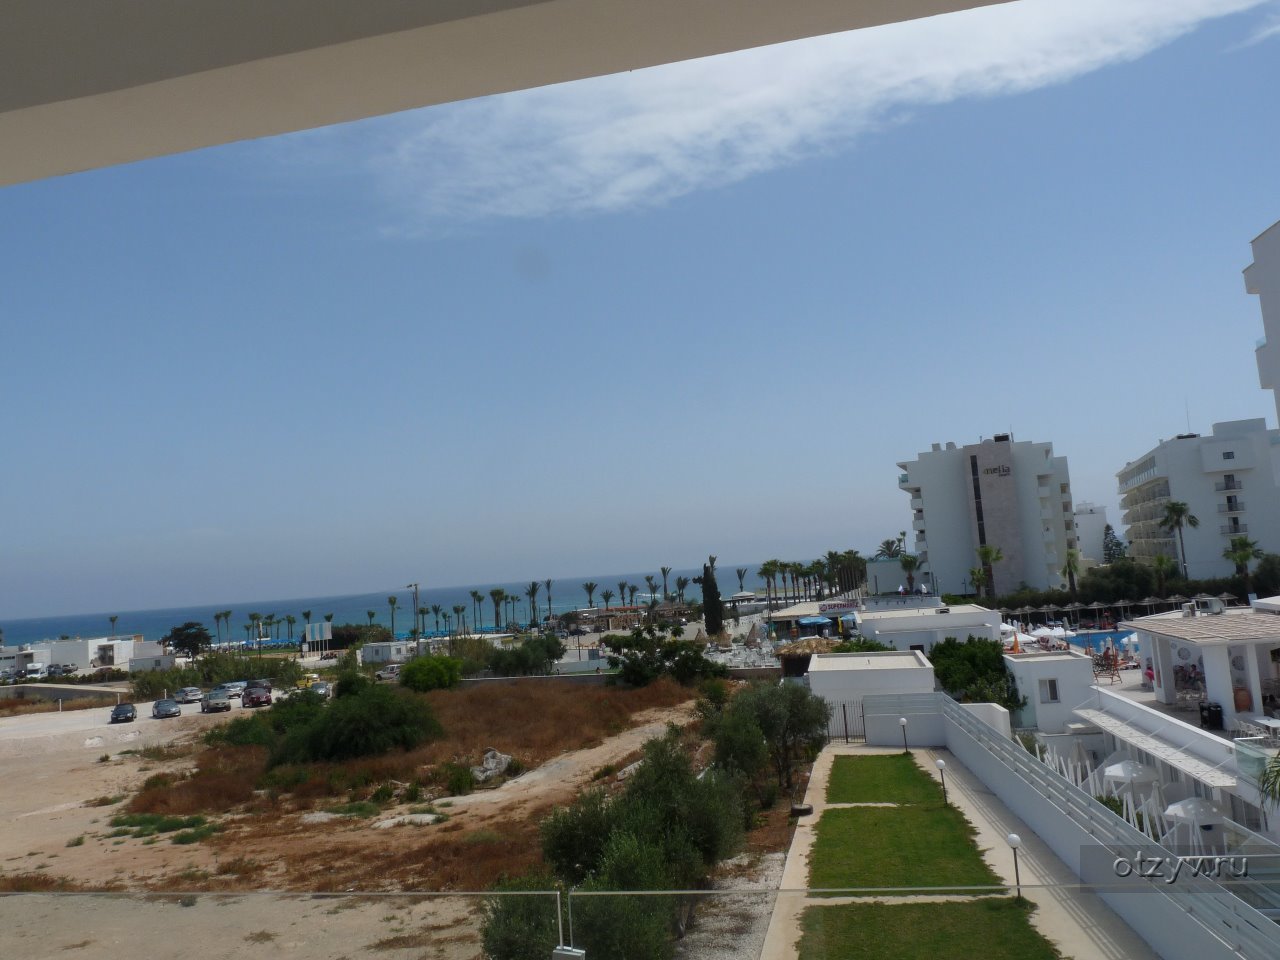 New Famagusta